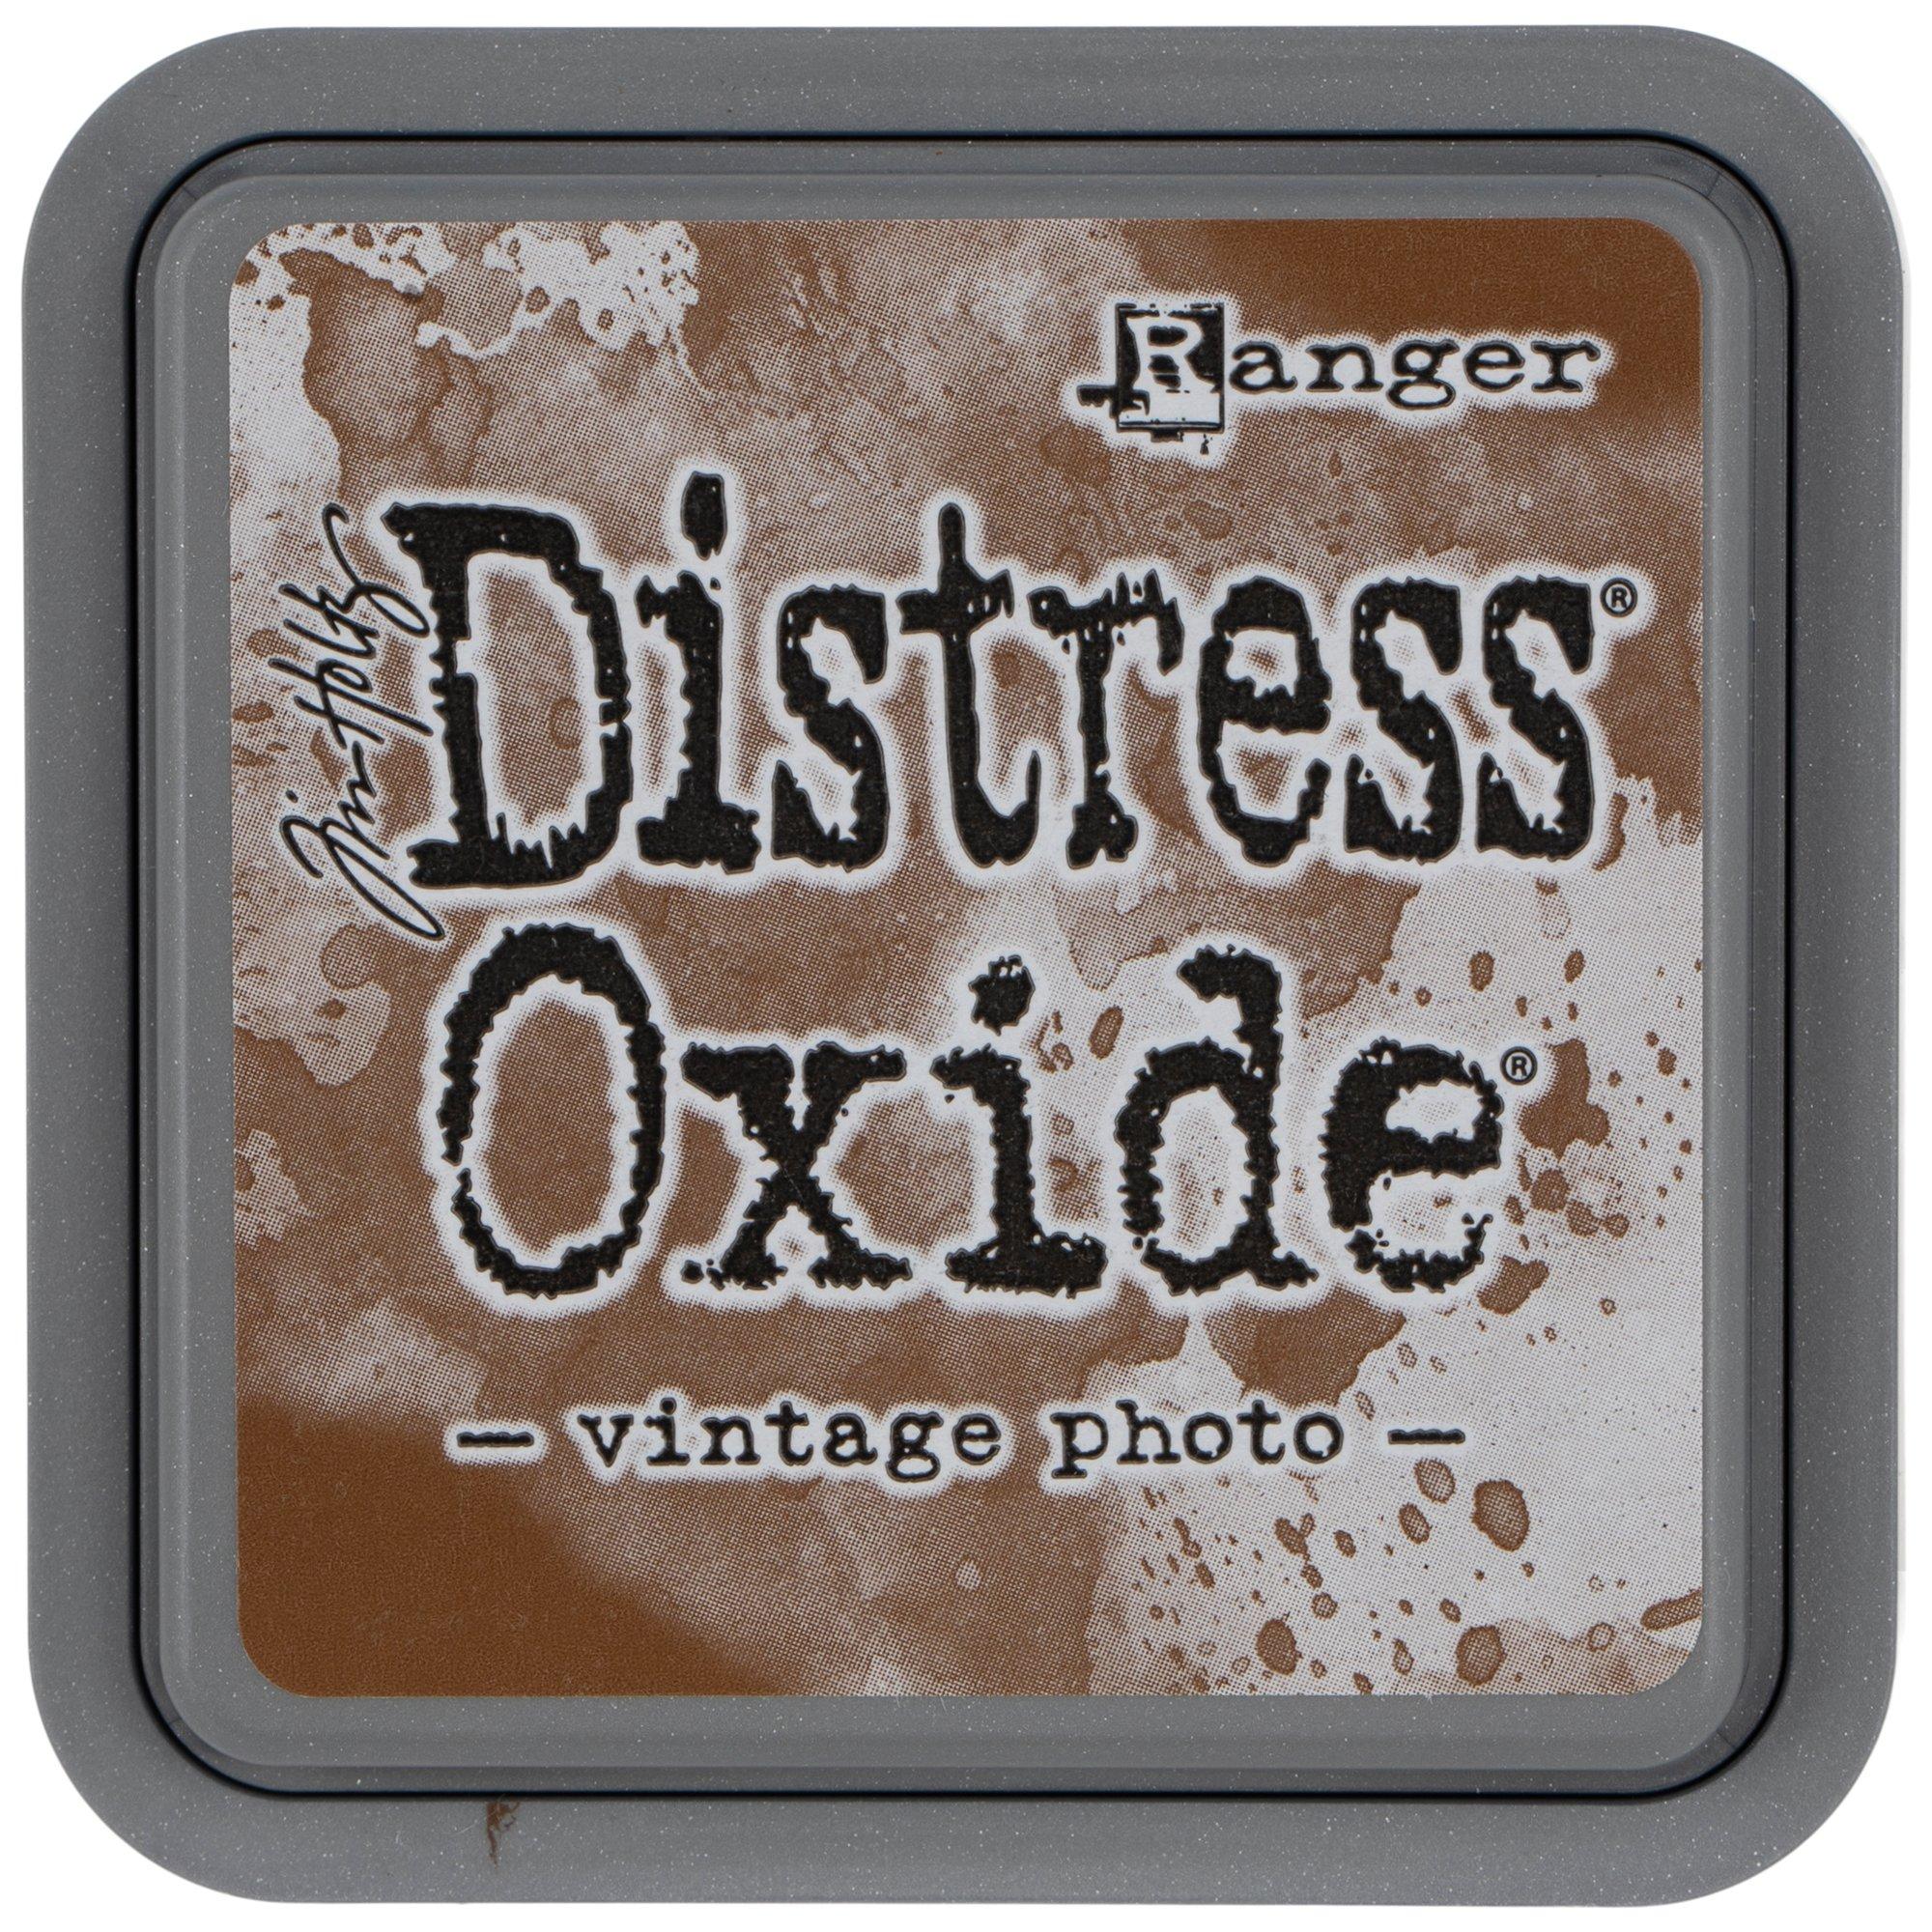 Tim Holtz Distress Oxides Ink Pad-Tumbled Glass, 1 count - Kroger